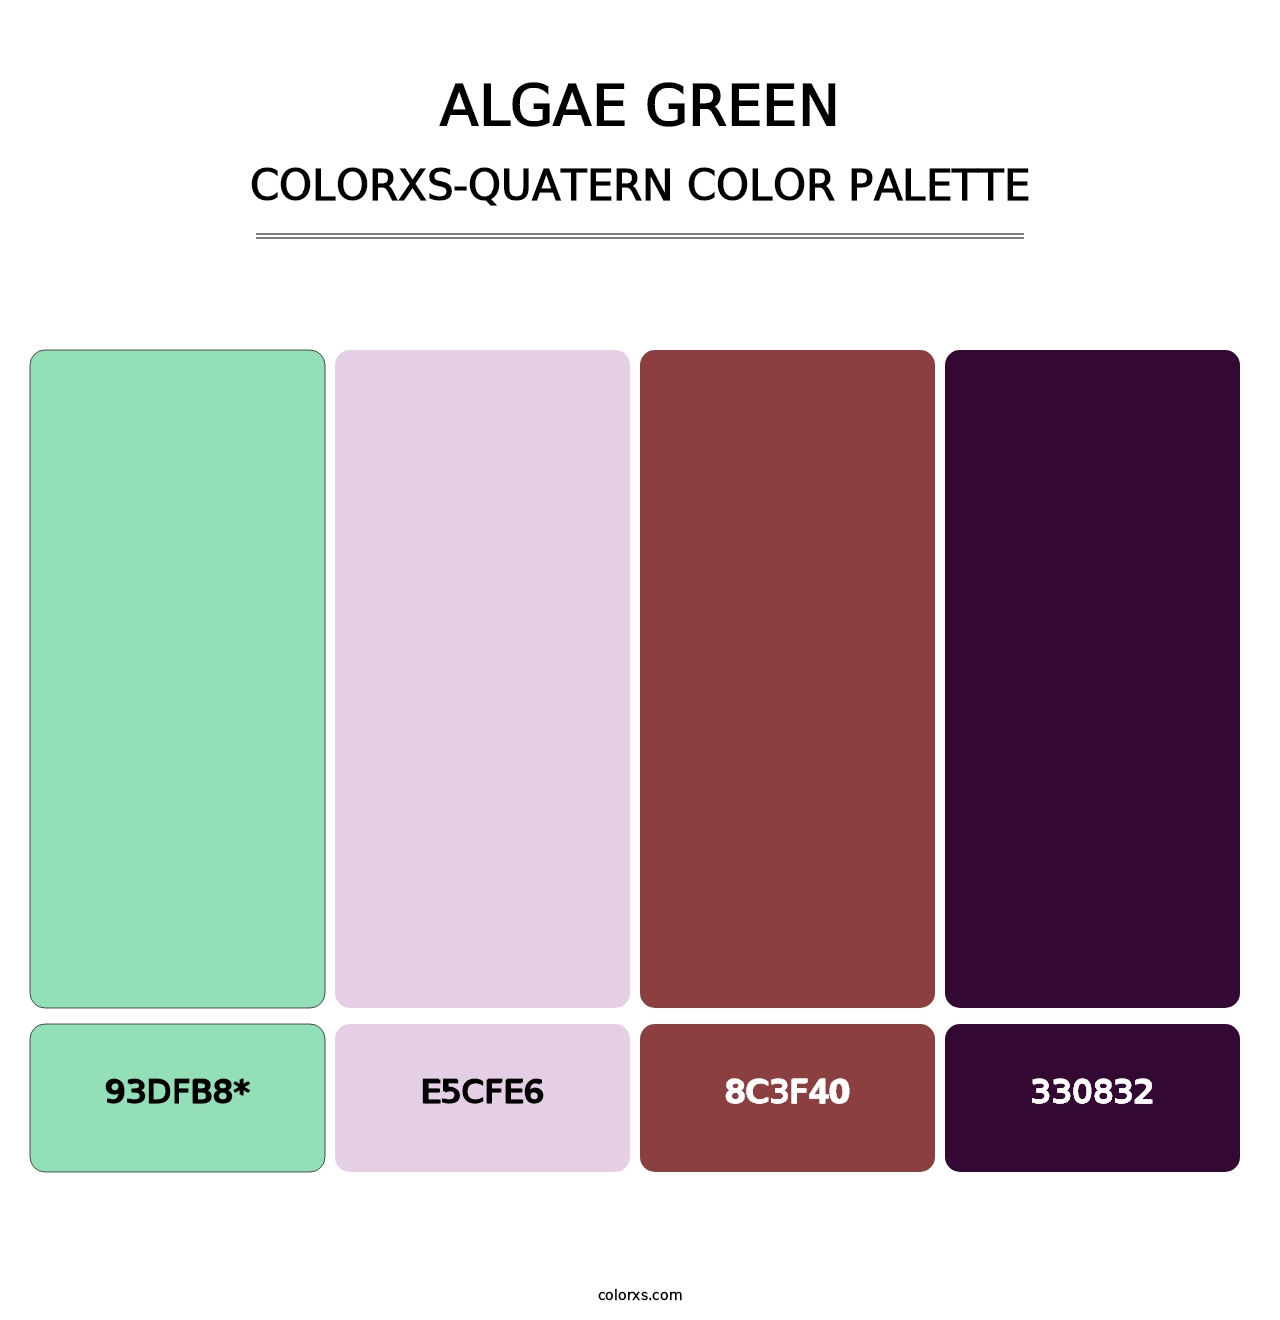 Algae Green - Colorxs Quatern Palette